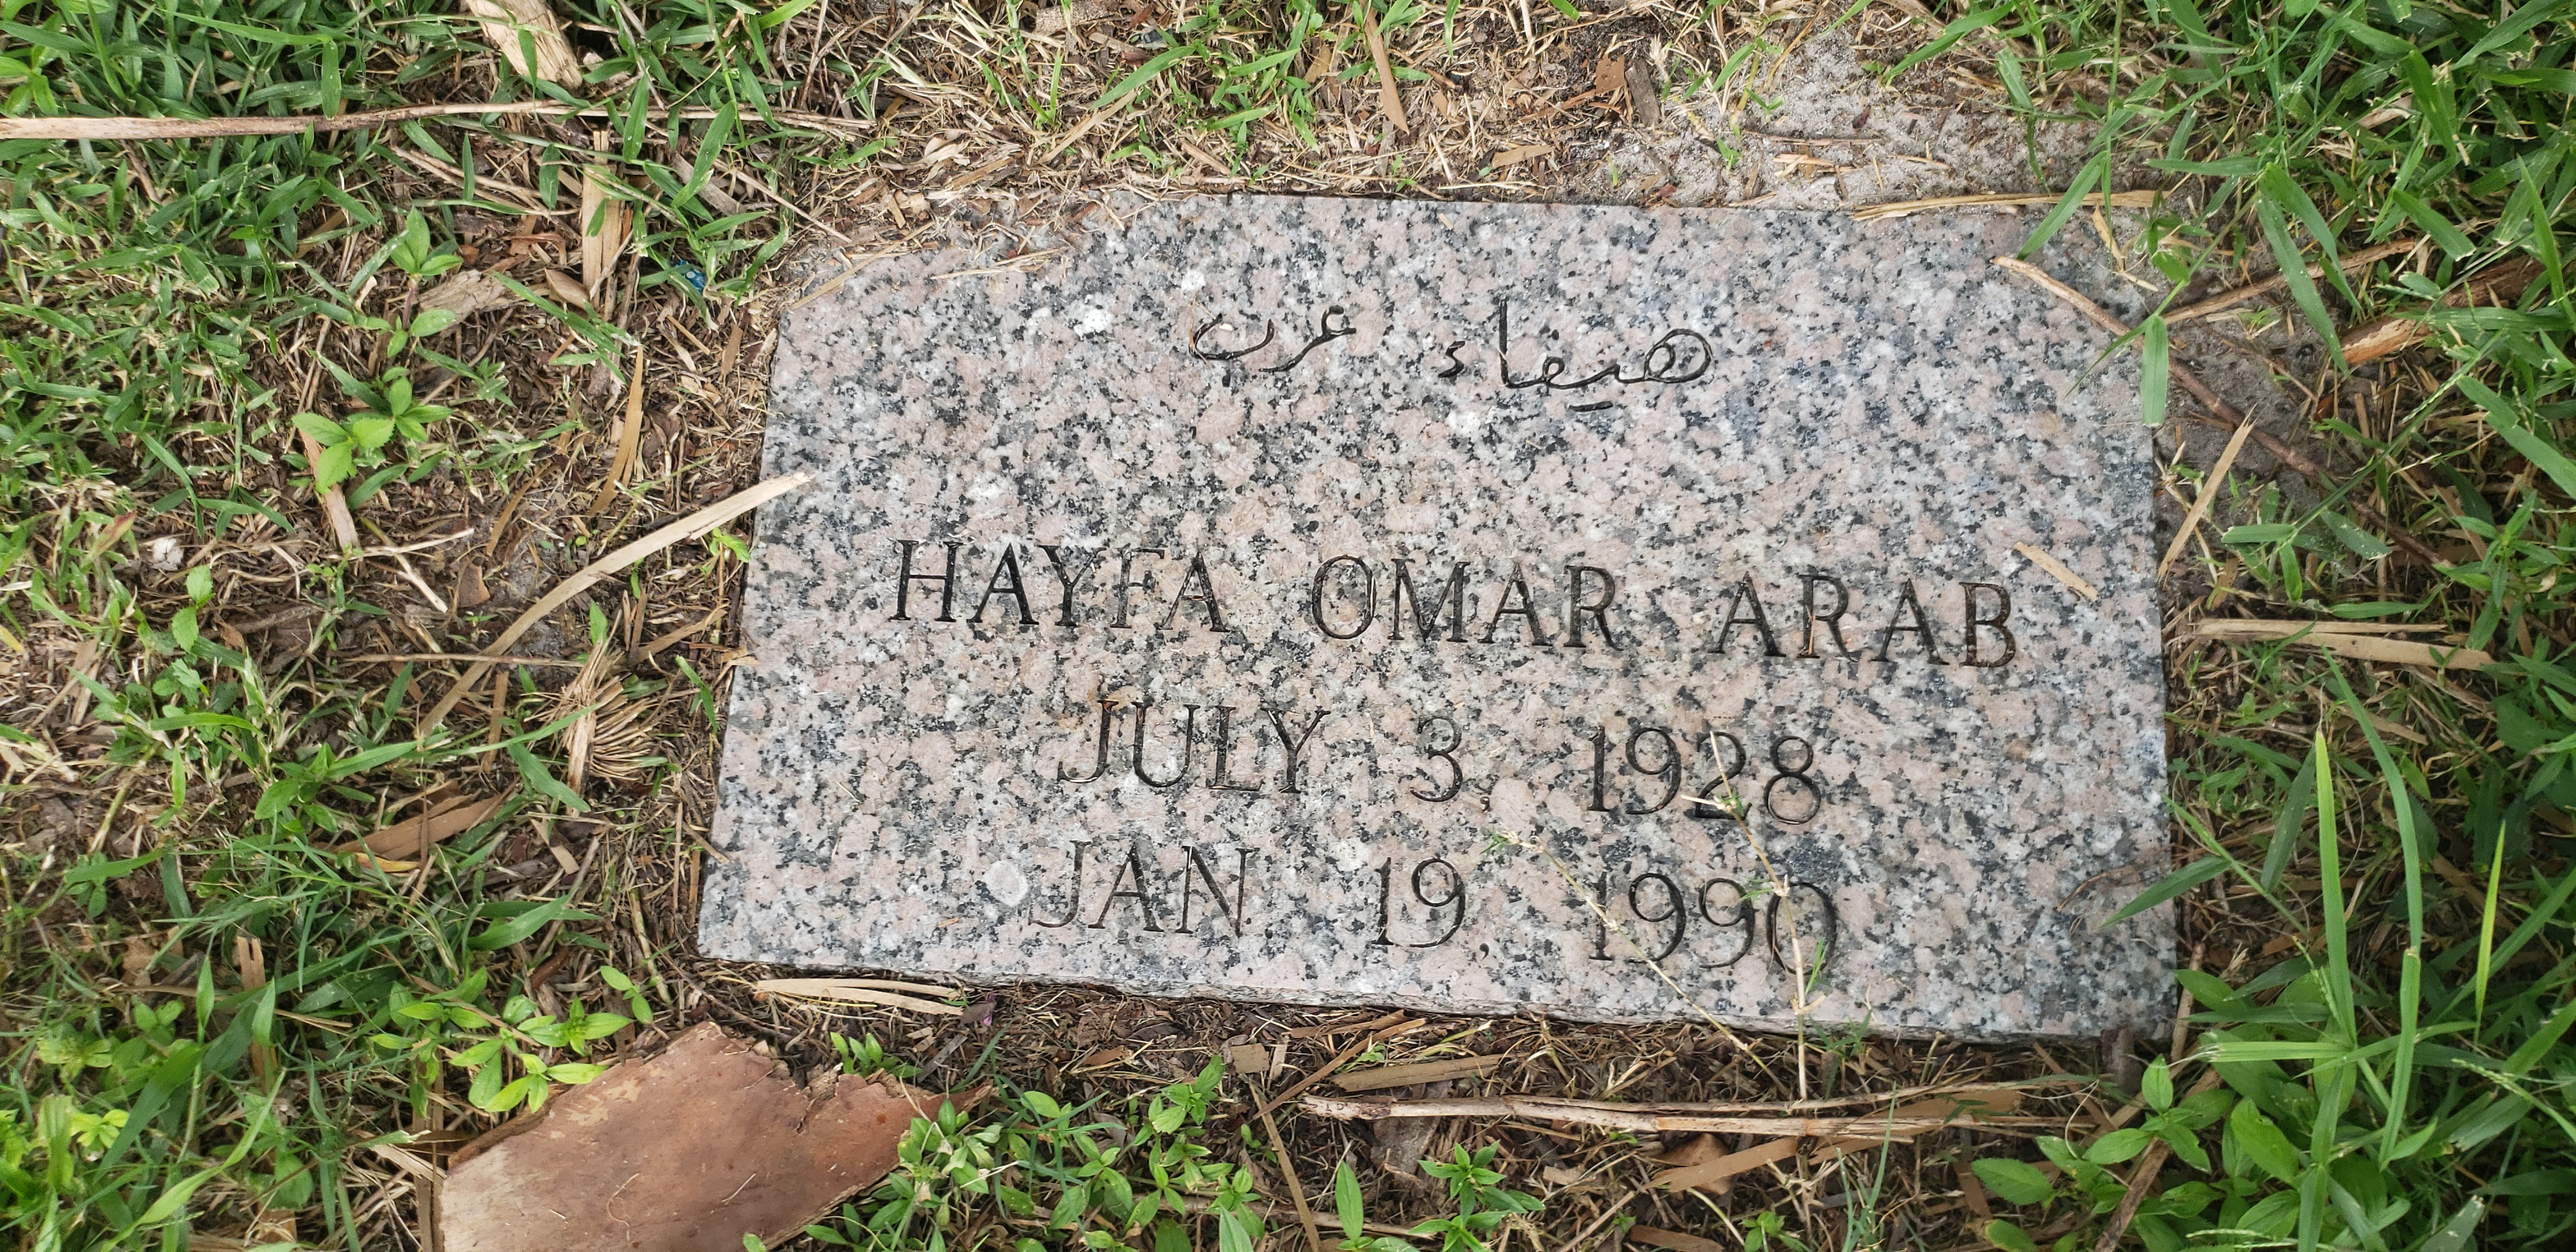 Hayfa Omar Arab